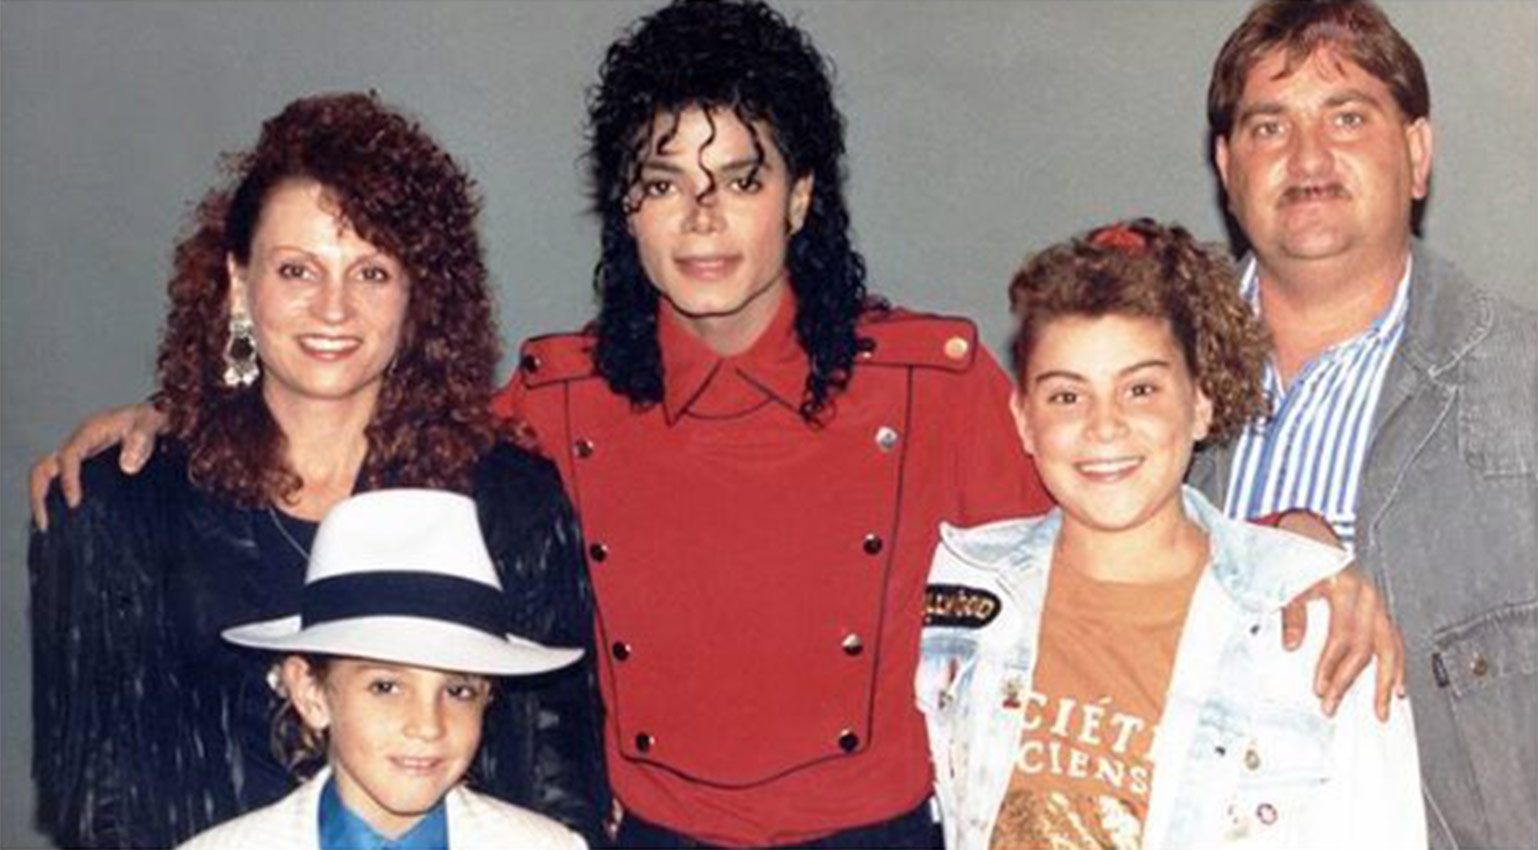 Judge Sides With Michael Jacksons Estate Sends ‘leaving Neverland